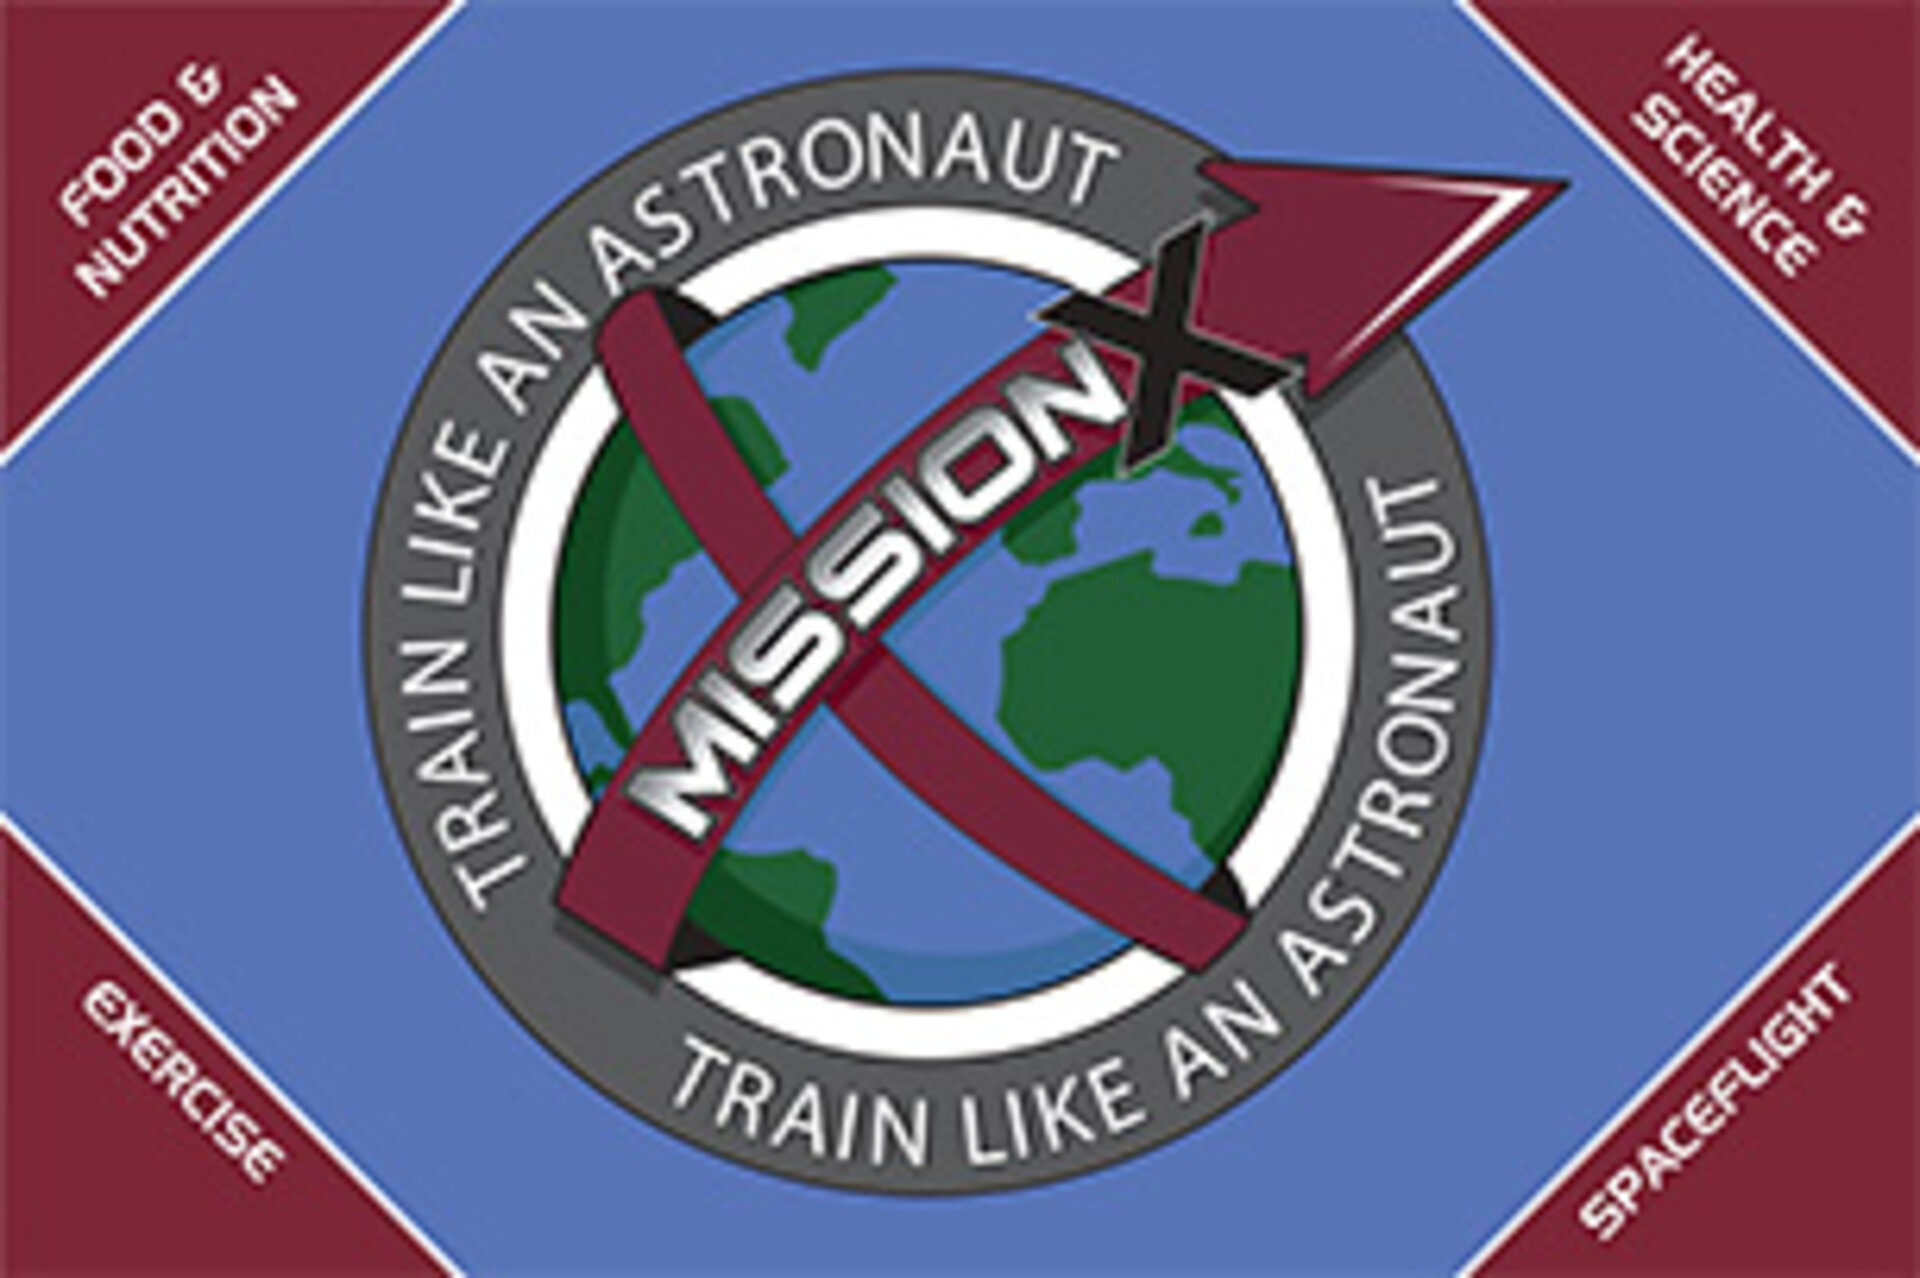 Mission X - Train Like an Astronaut